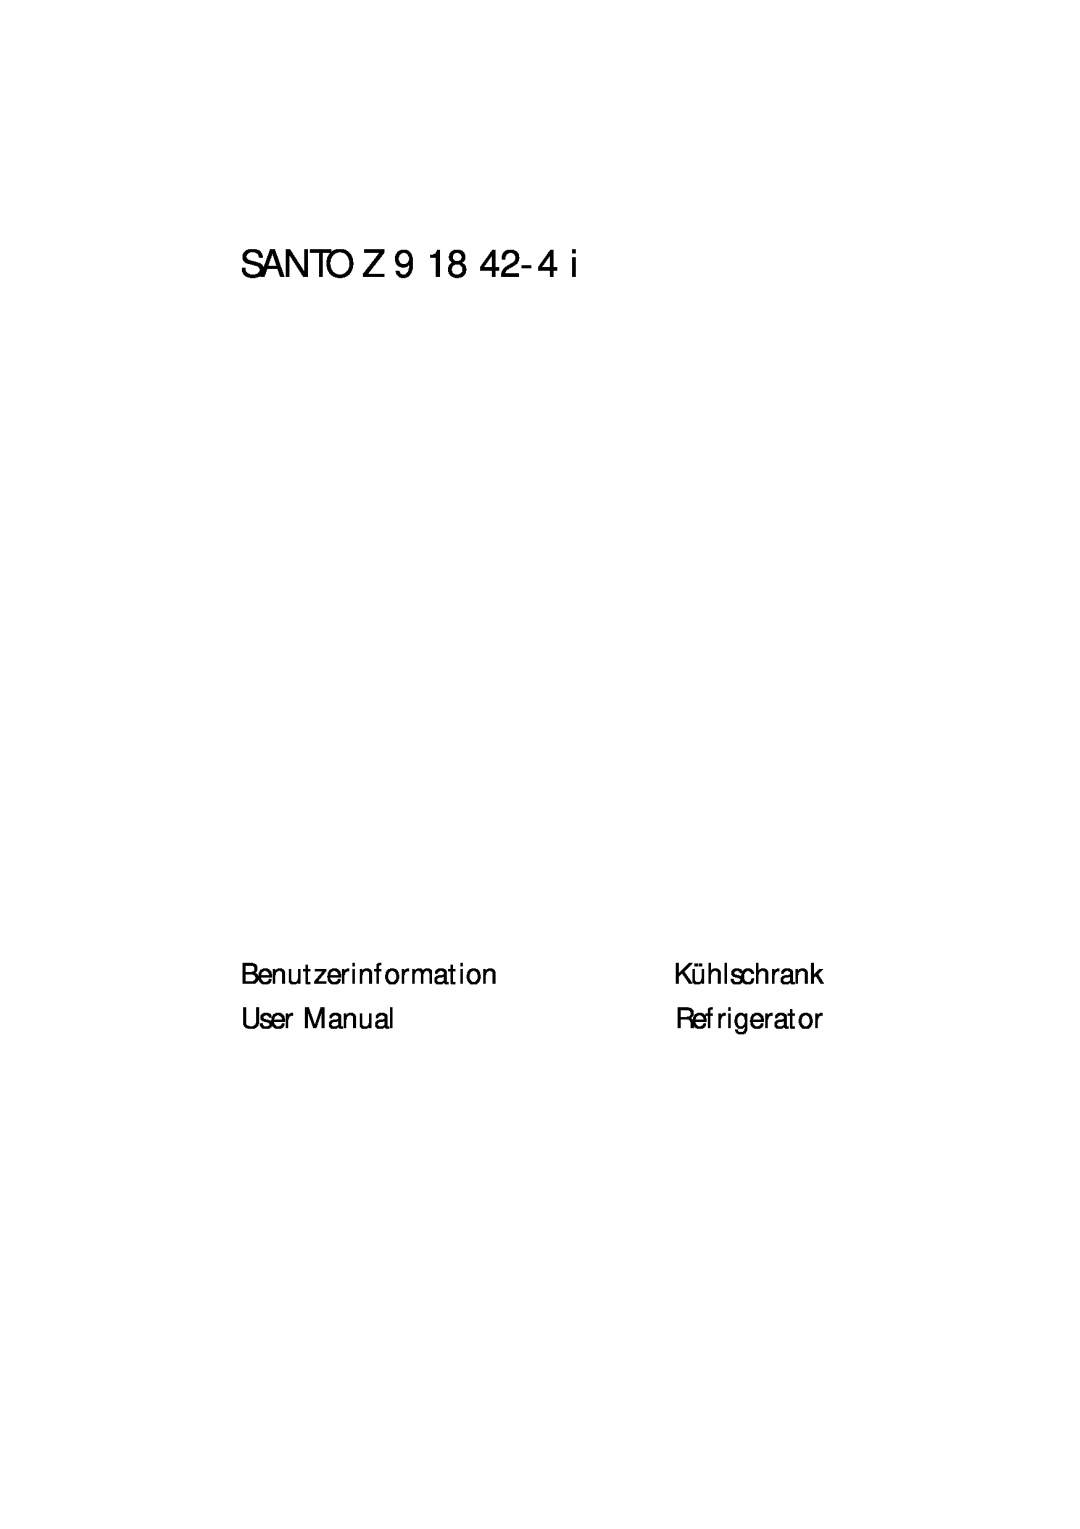 Electrolux Z 9 18 42-4 I user manual BenutzerinformationKühlschrank, User Manual, SANTO Z 9 18 42-4 